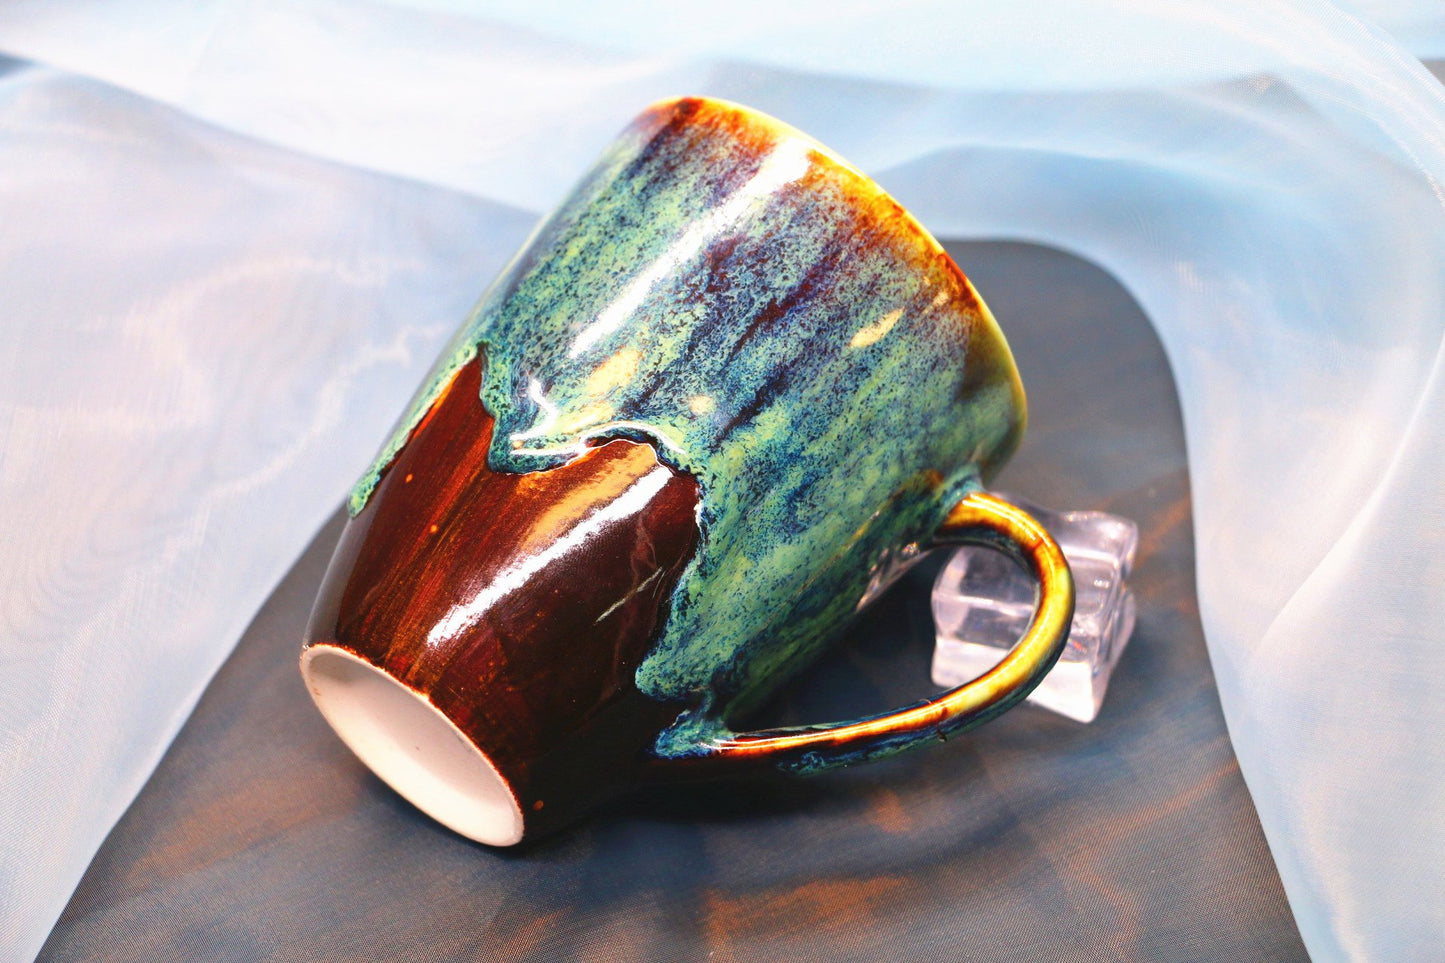 Handmade Psychedelic Green Ceramic Mug, Personalized Pottery Mug